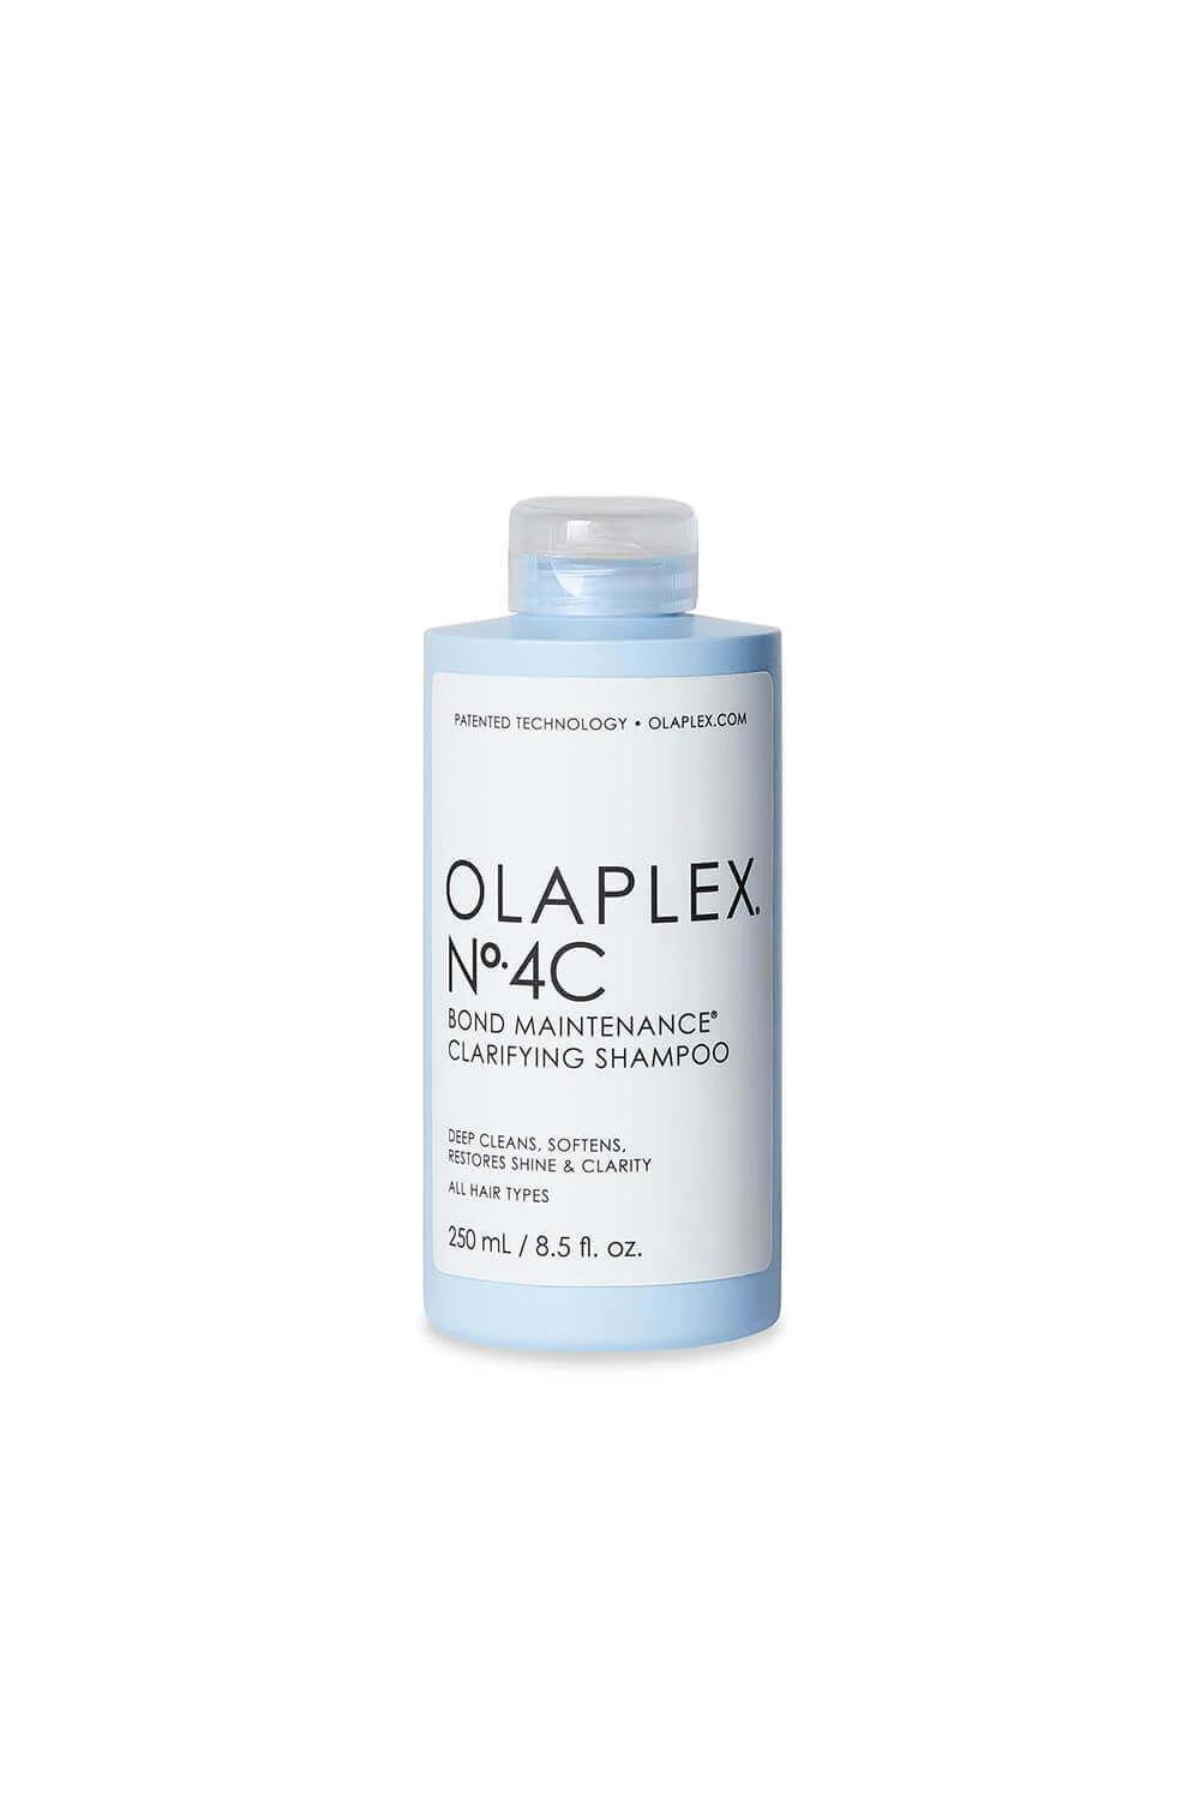 Olaplex #4C Clarifying Shampoo